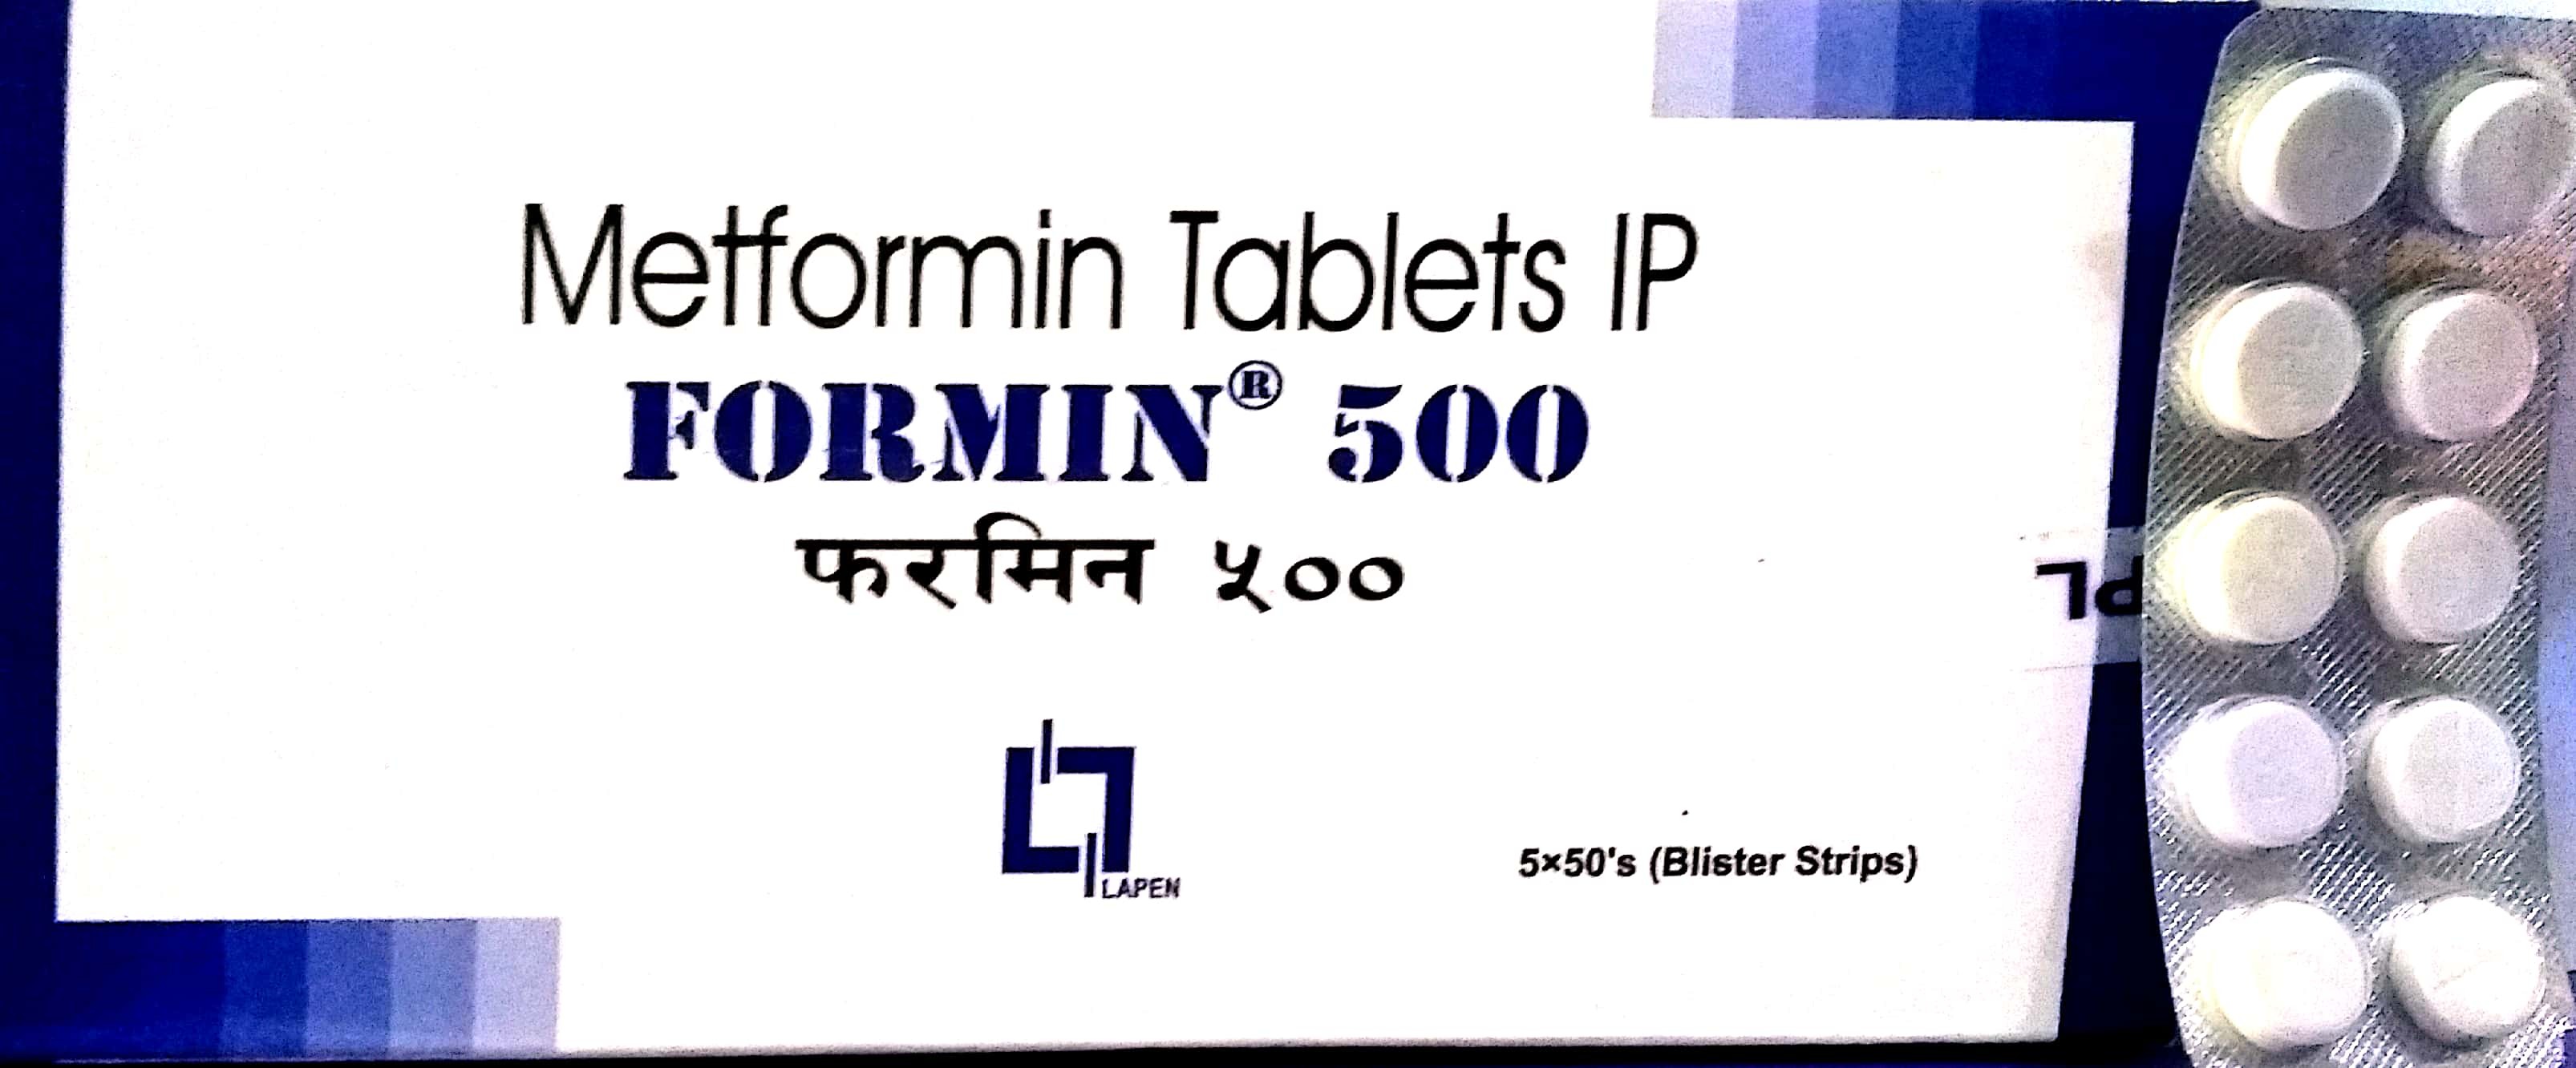 Formin-500mg